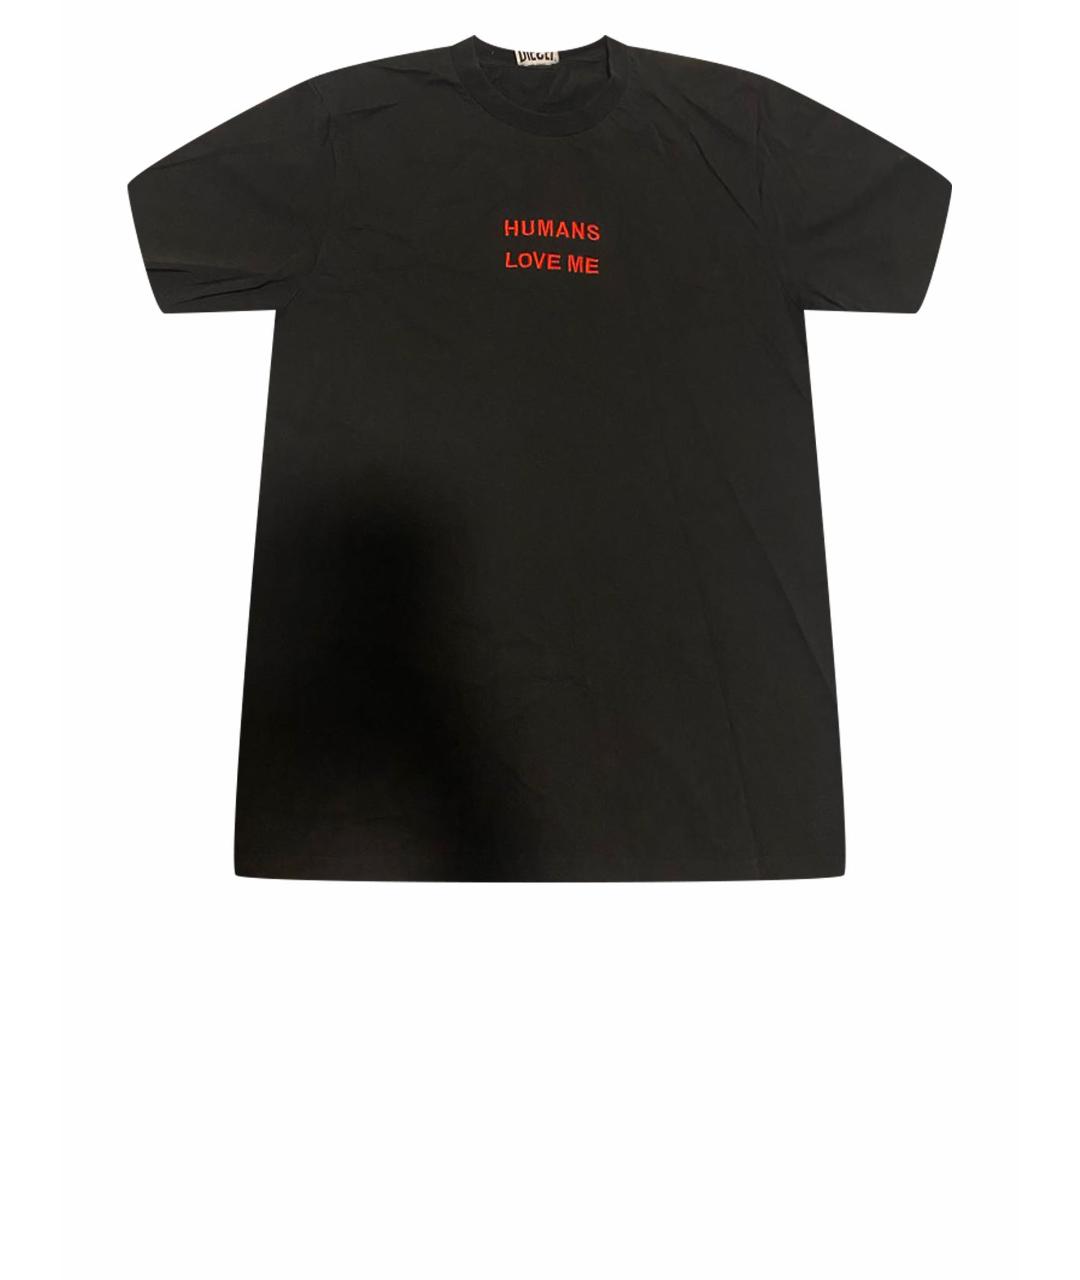 DIESEL Черная хлопковая футболка, фото 1